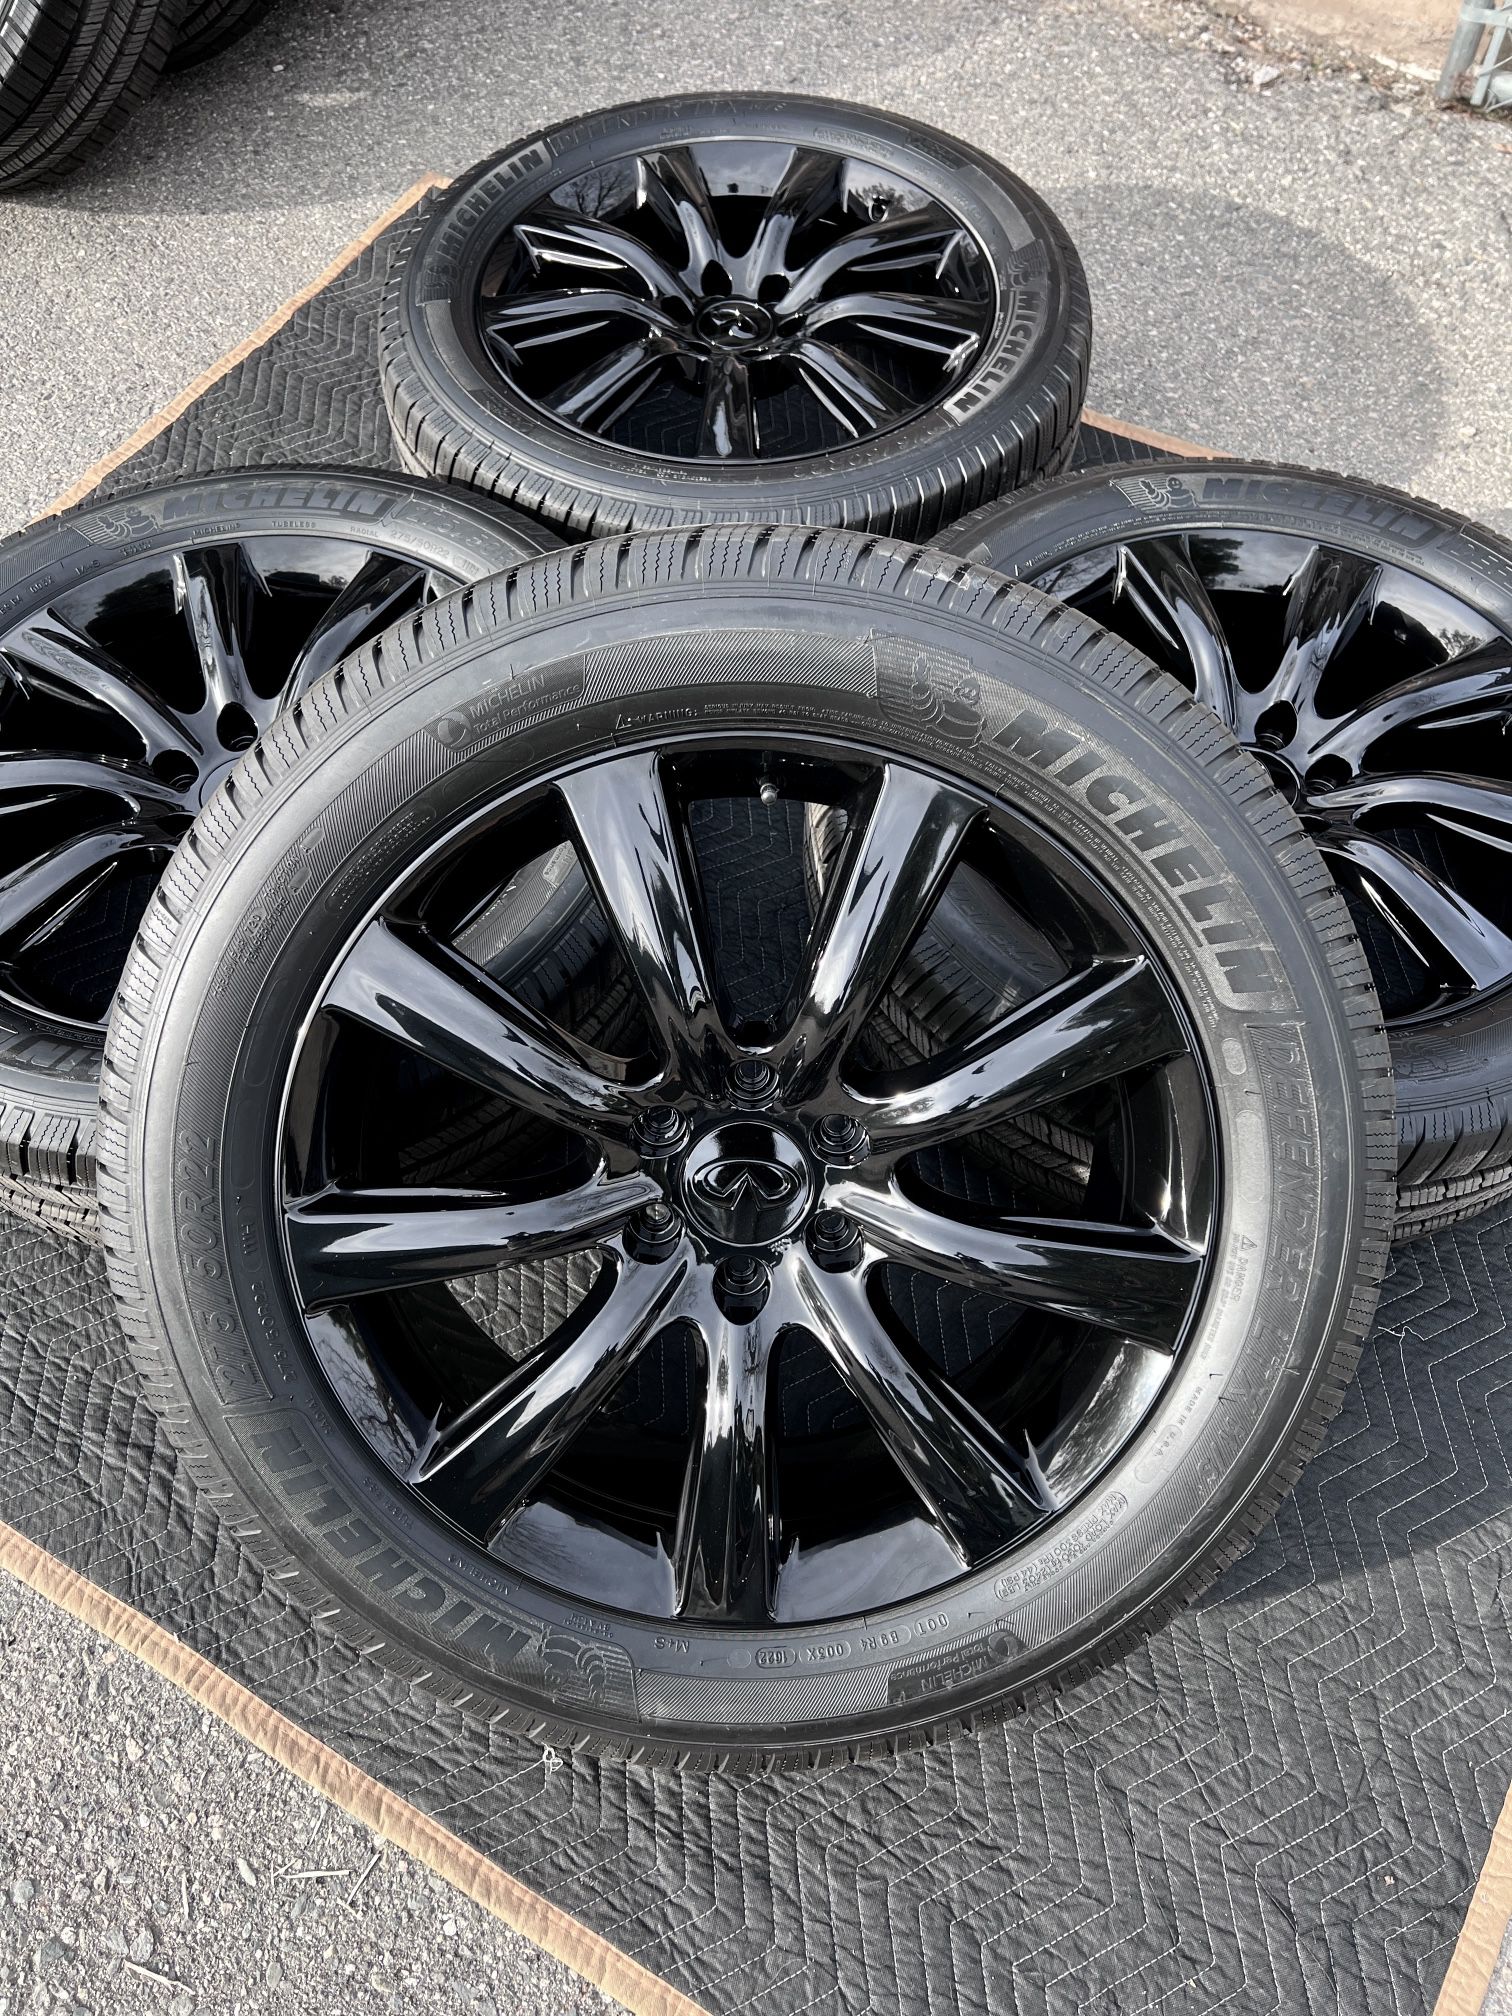 (CASH ONLY) Oem Factory 22” Infiniti QX80 Luxe Premium Sensory Black Tires Wheels Rims Rines